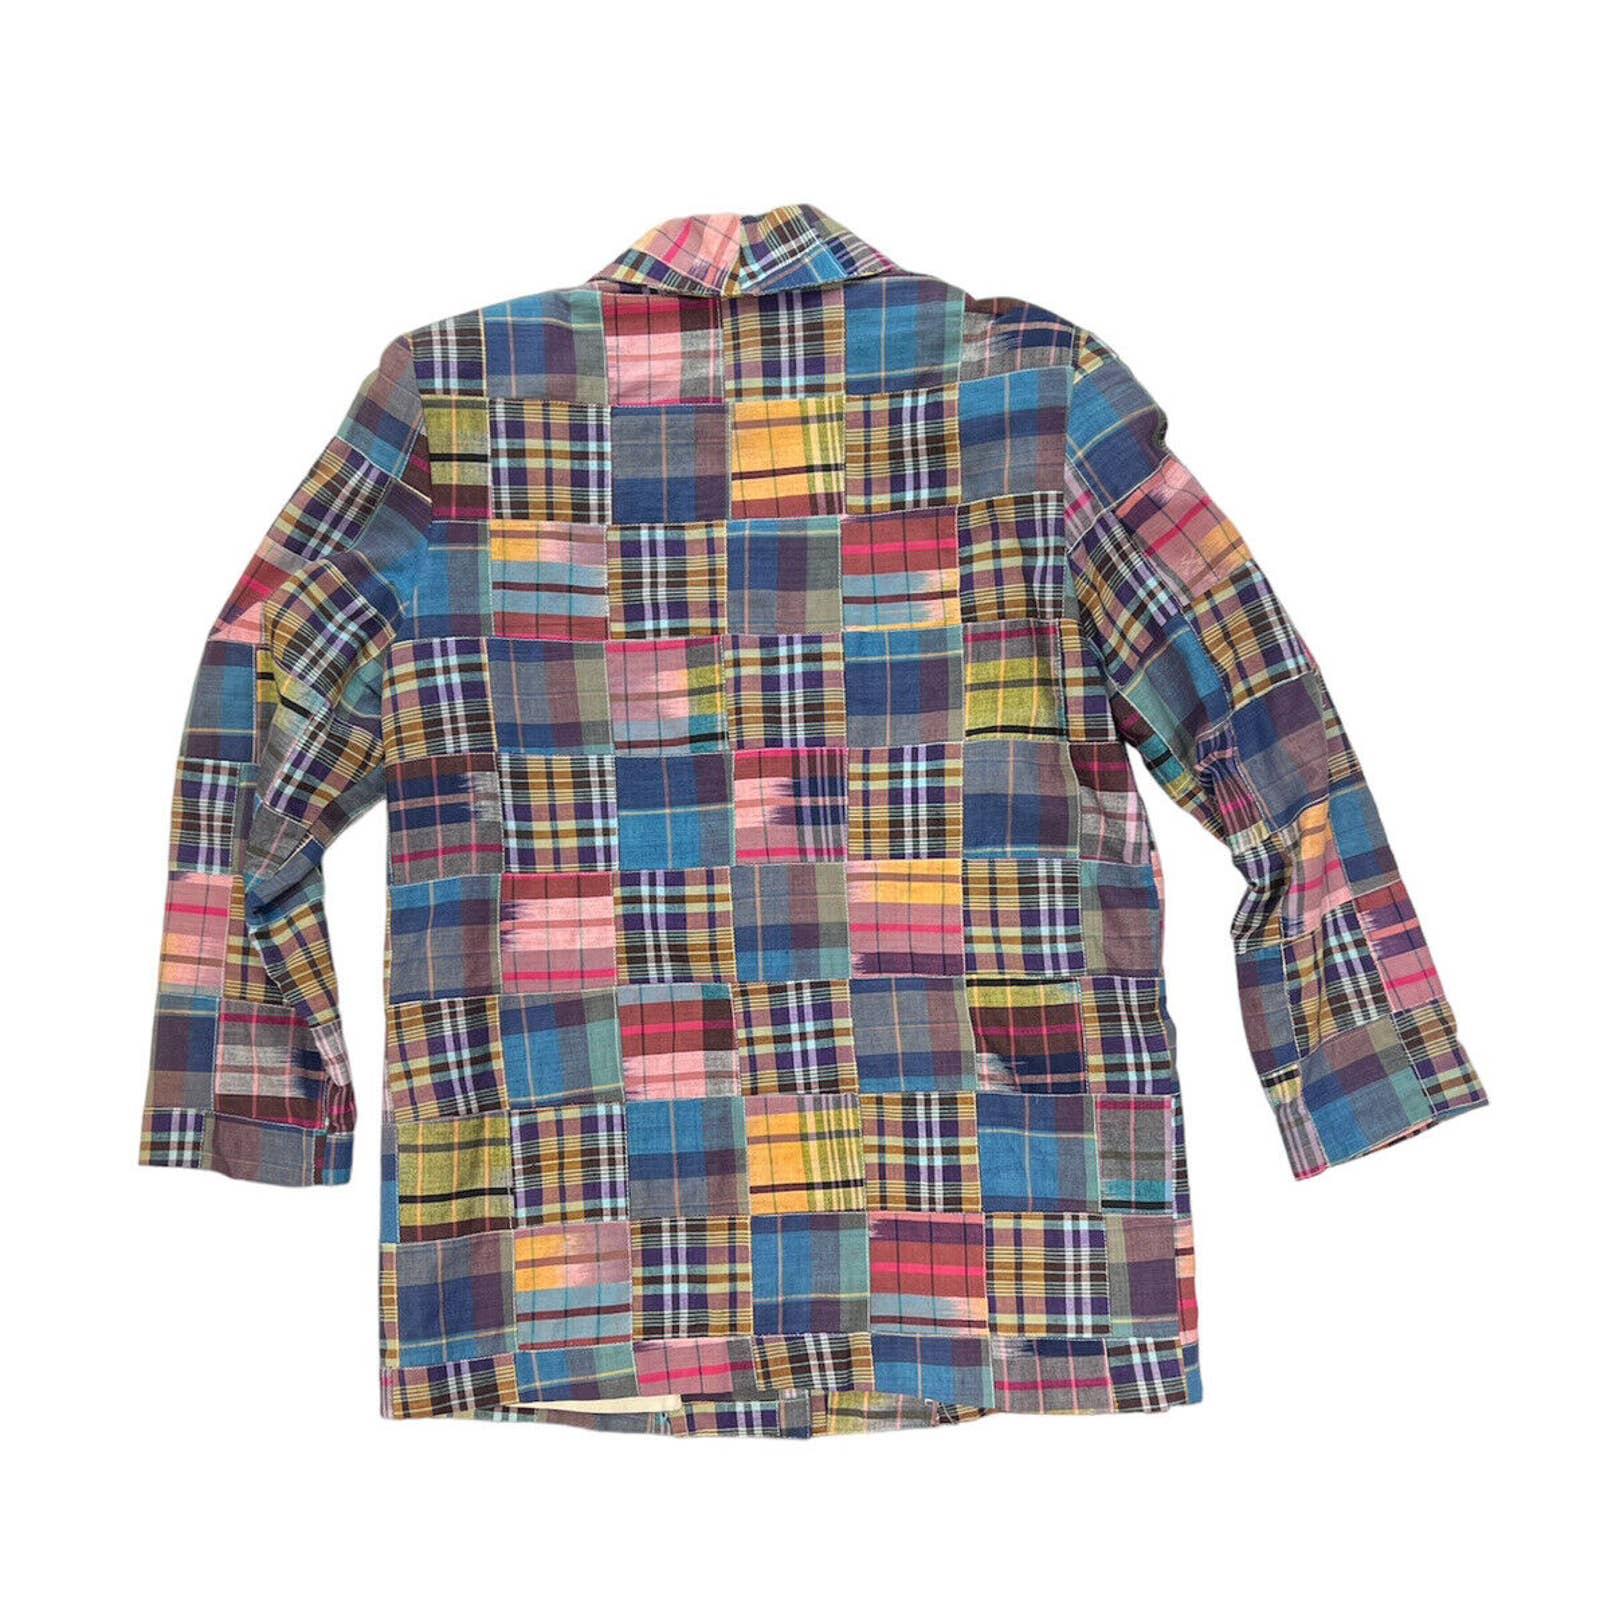 Michael Lewis Vintage Patchwork One Button Blazer Women’s Medium Jacket Colorful